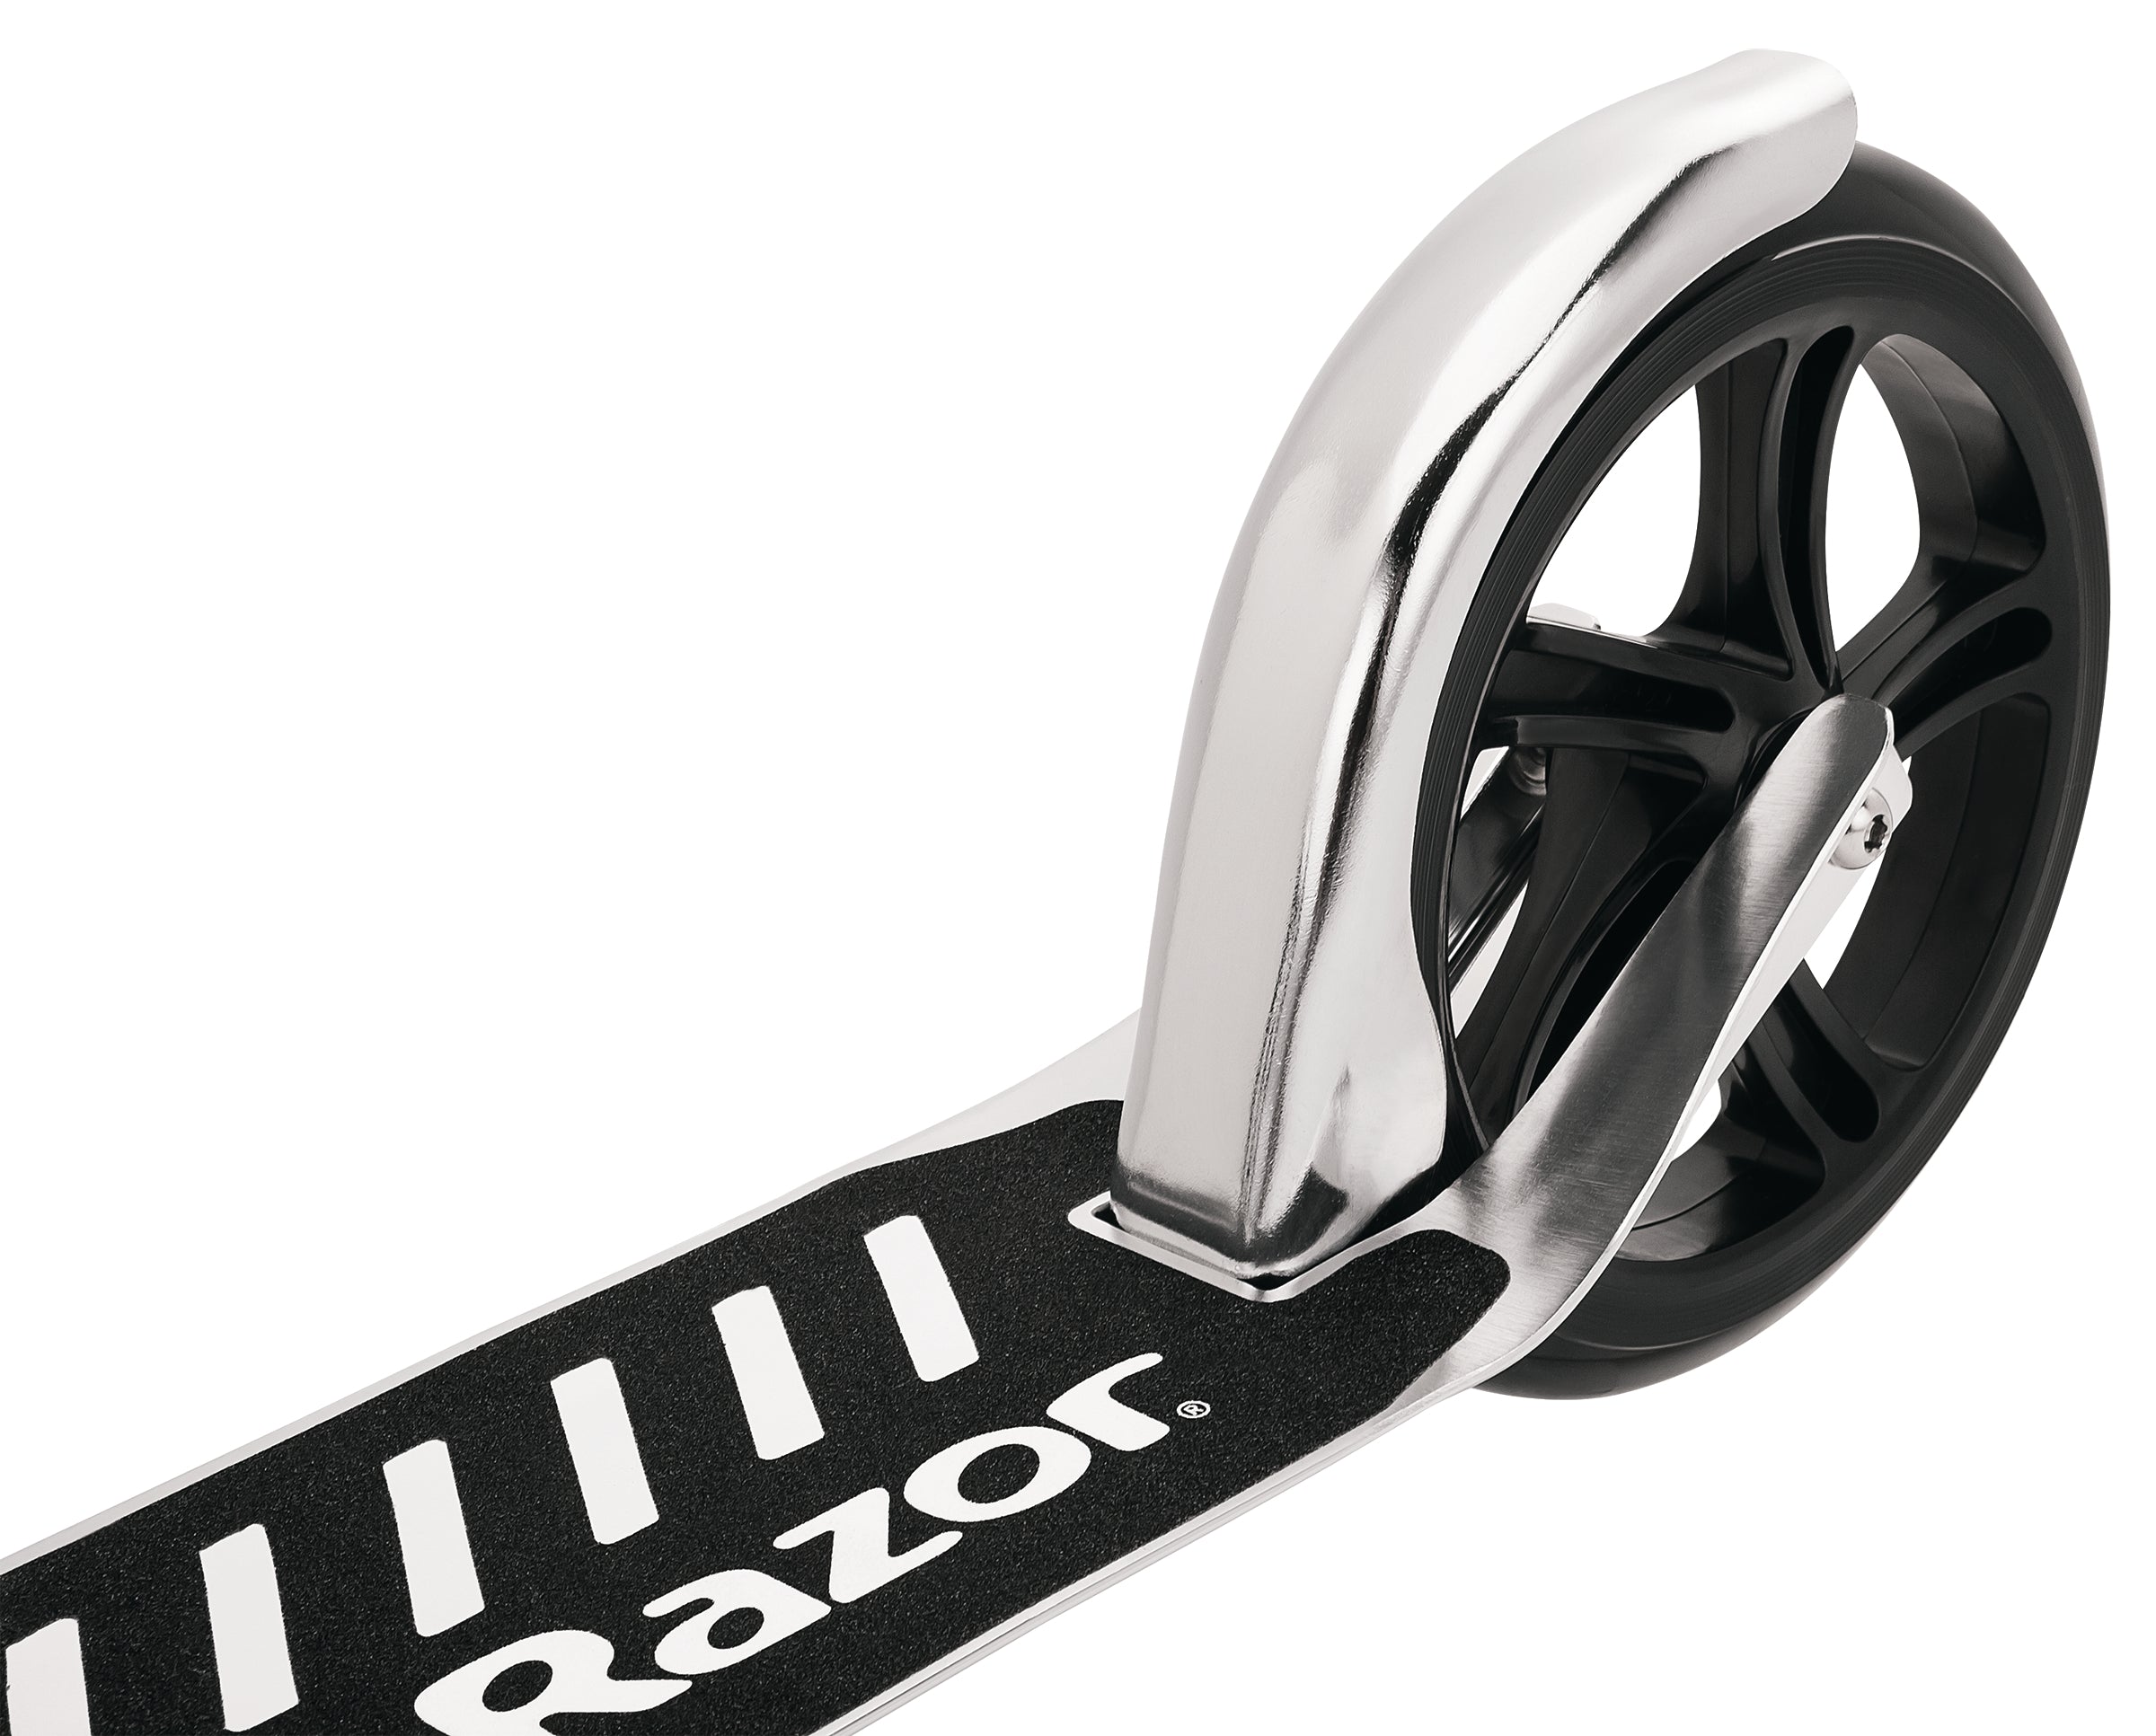 Razor A5 DLX Adjustable Height 8" Wheels Folding Kick Scooter Ages 8+ - Upzy.com